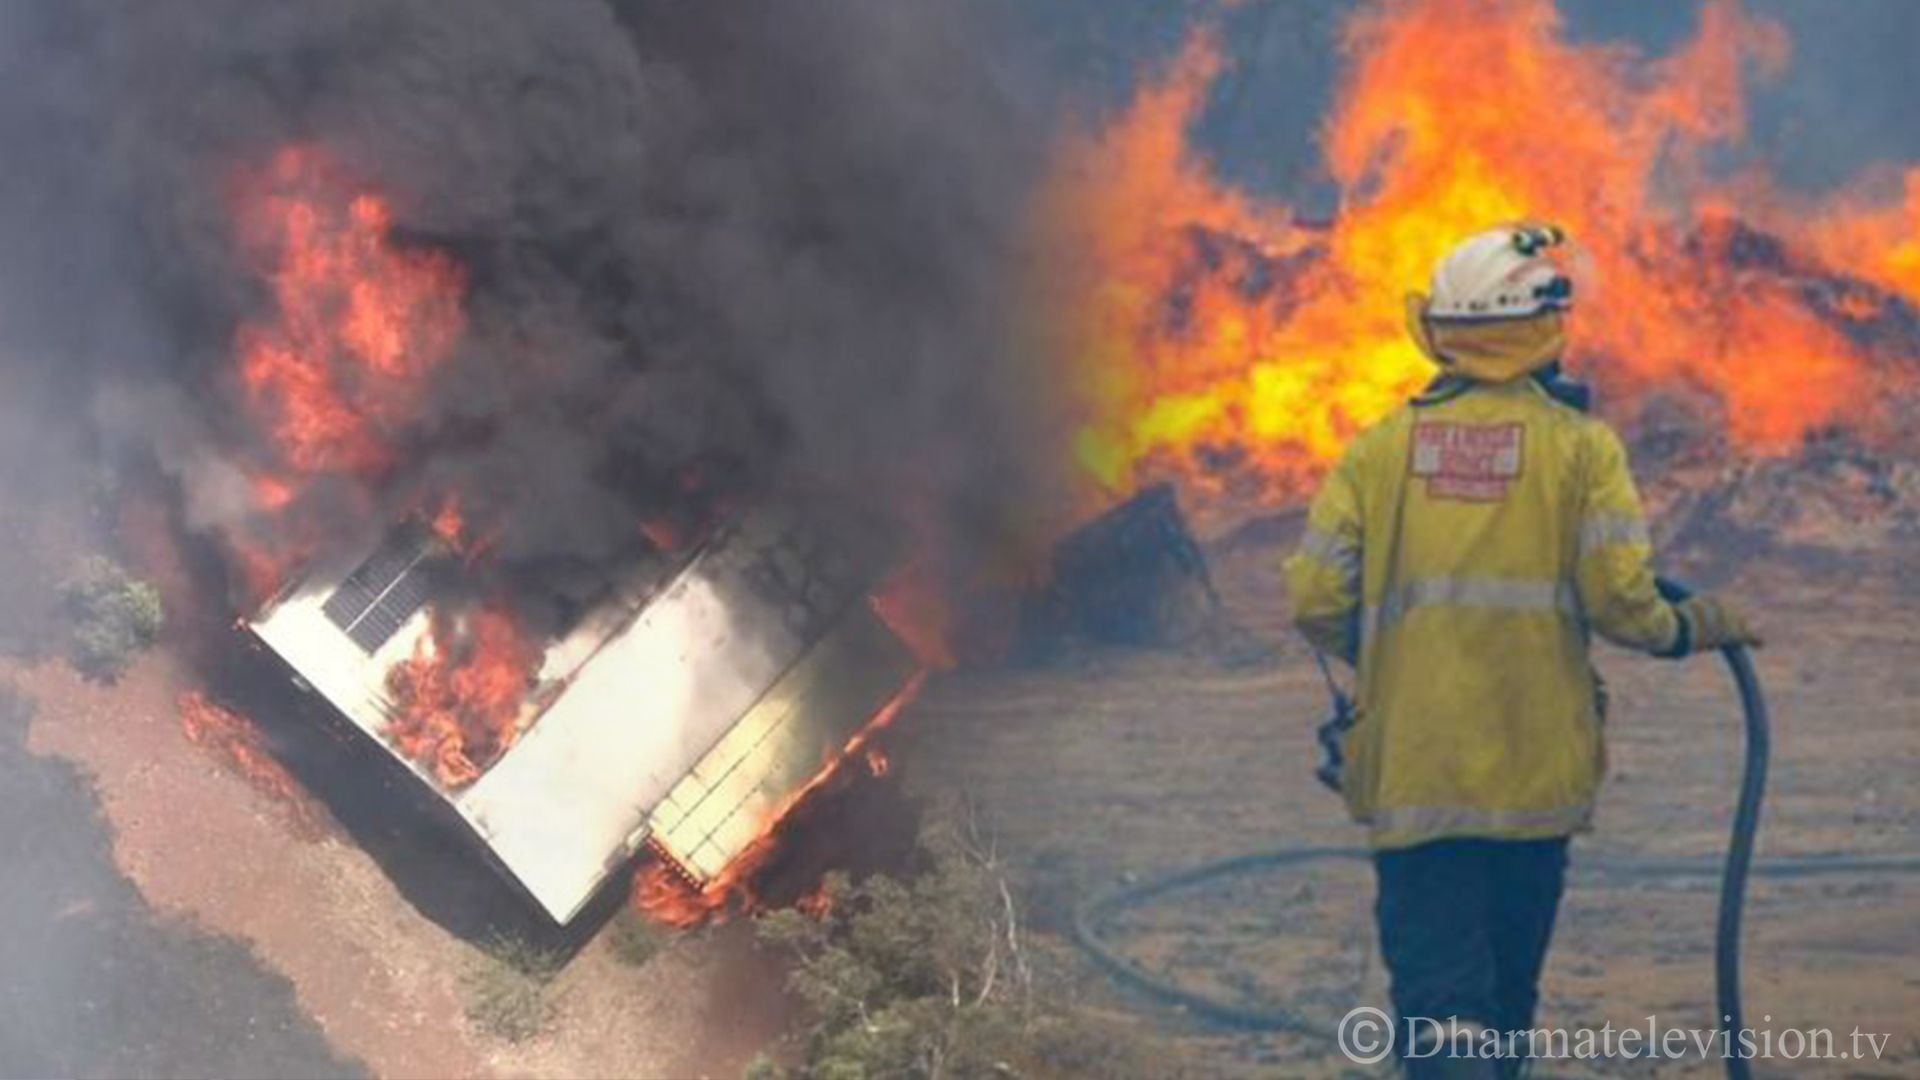 Bushfire threatens homes in Perth: Australia